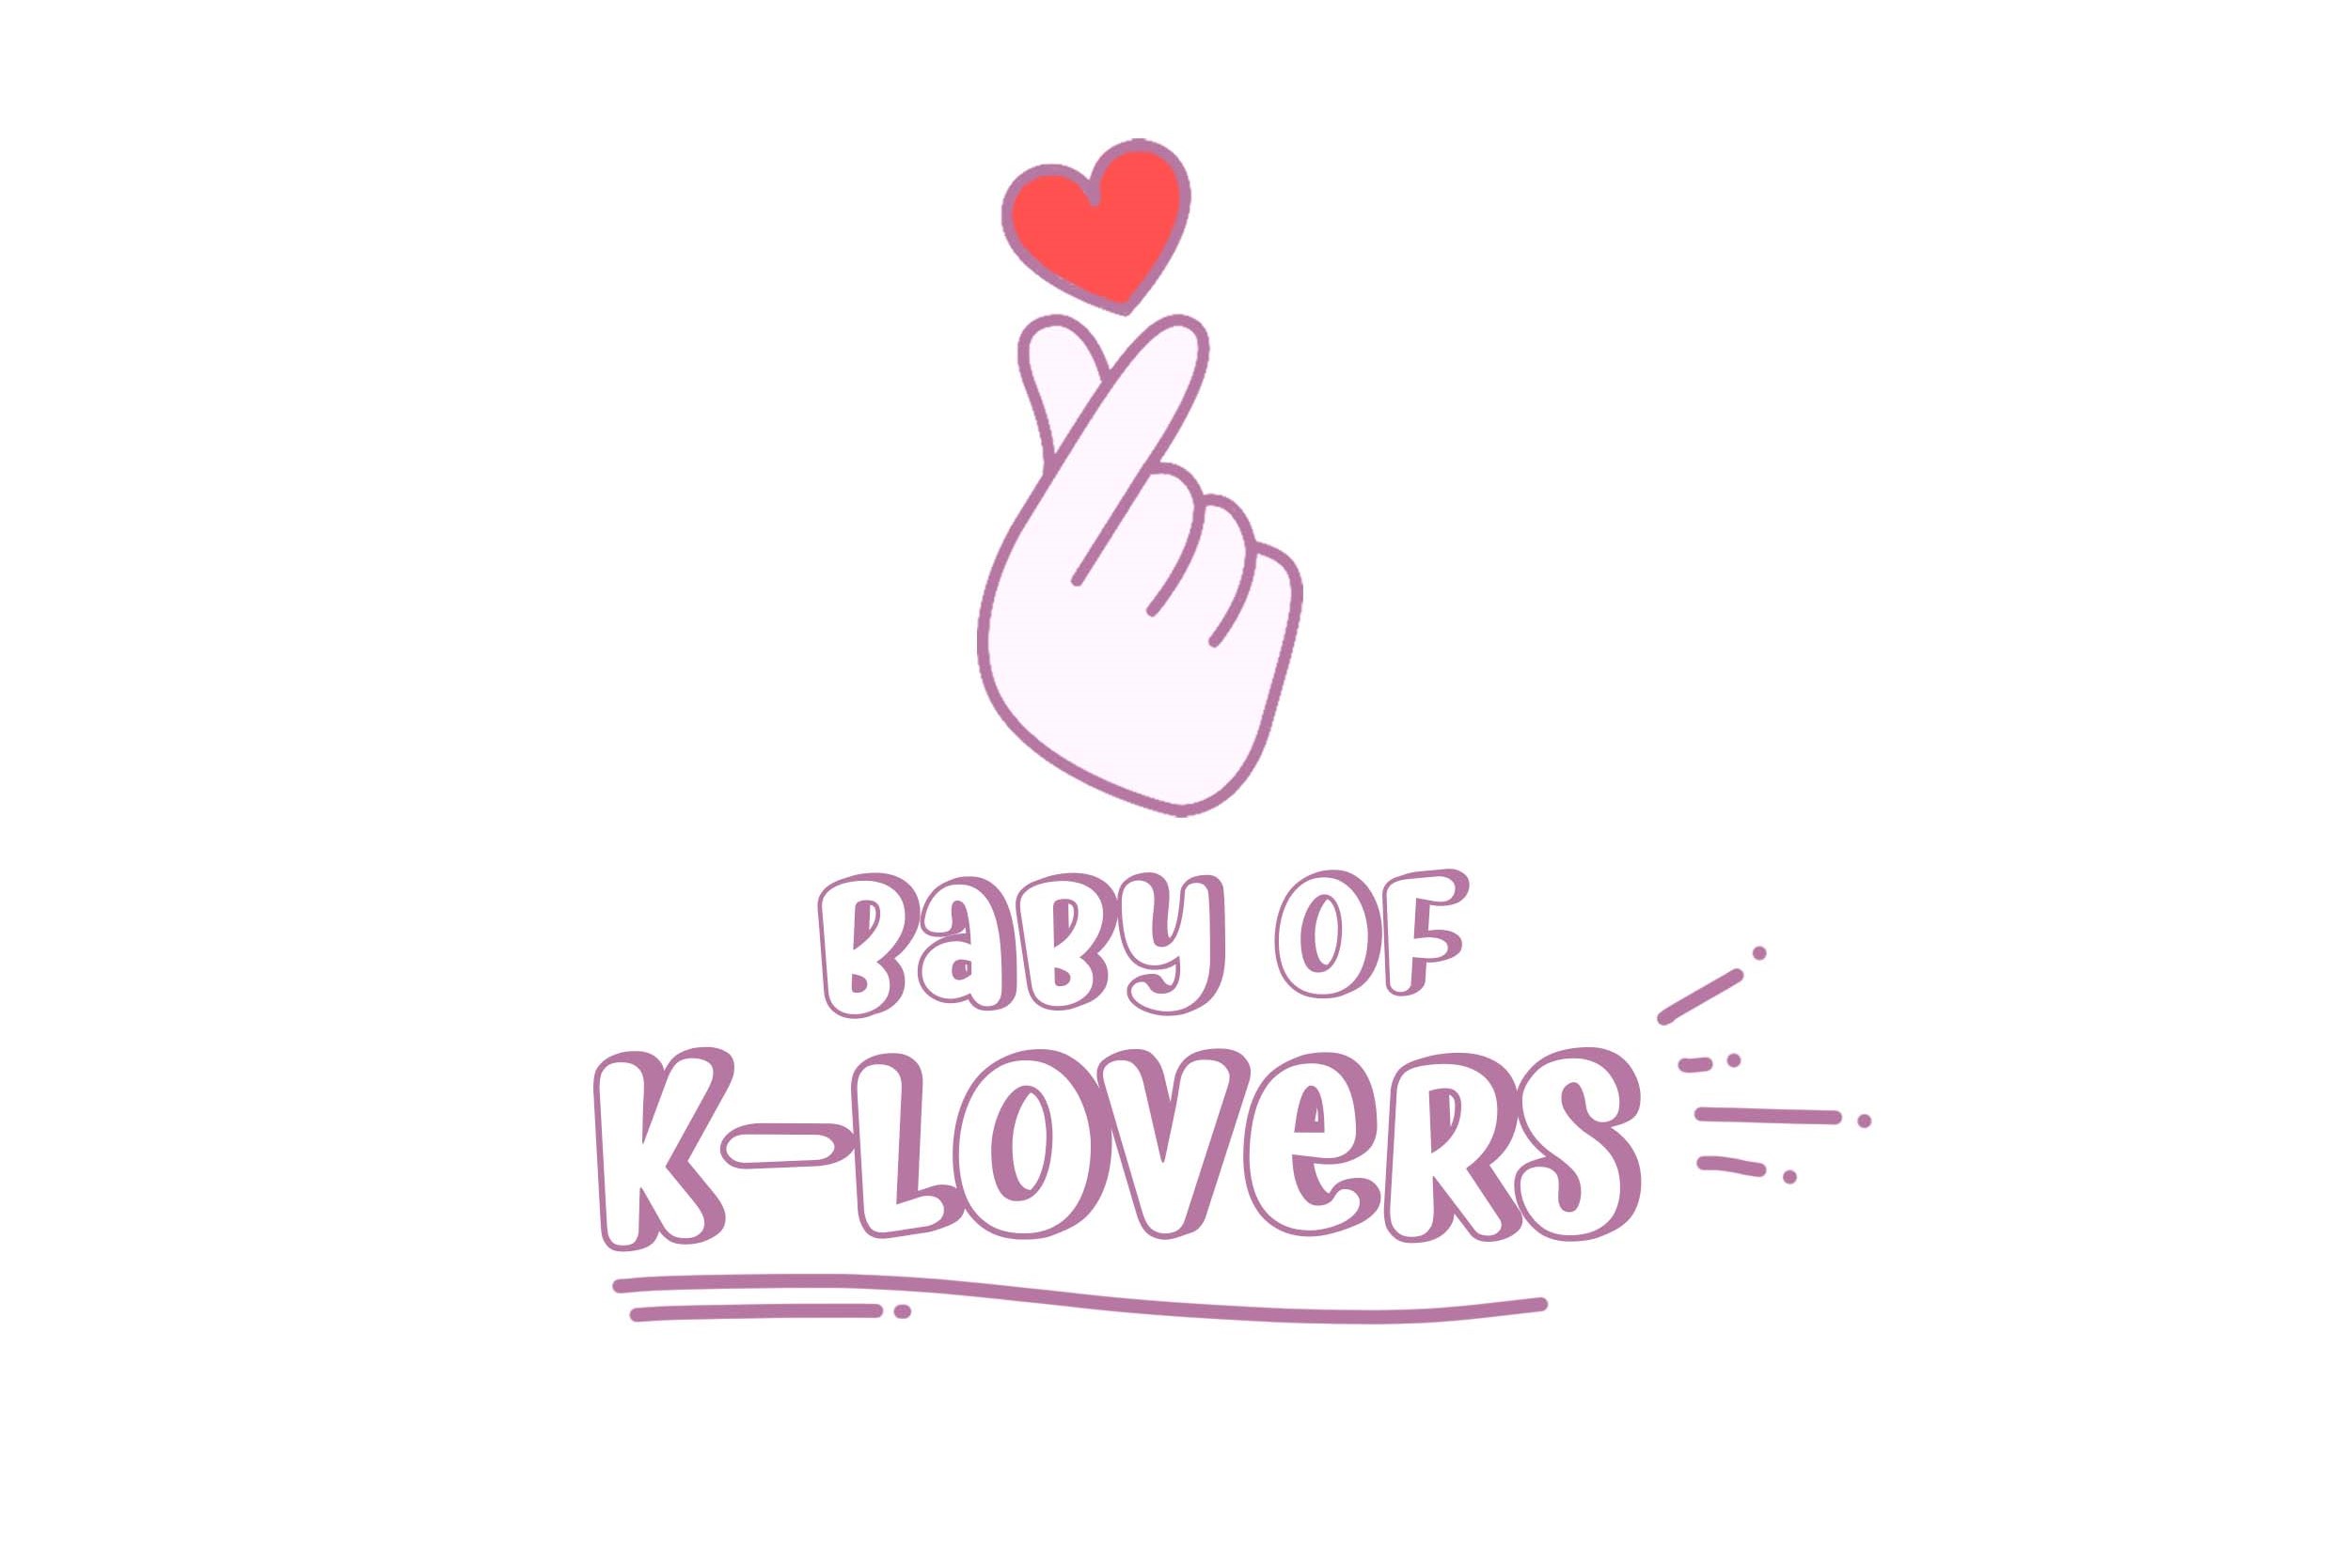 K-lovers.jpg